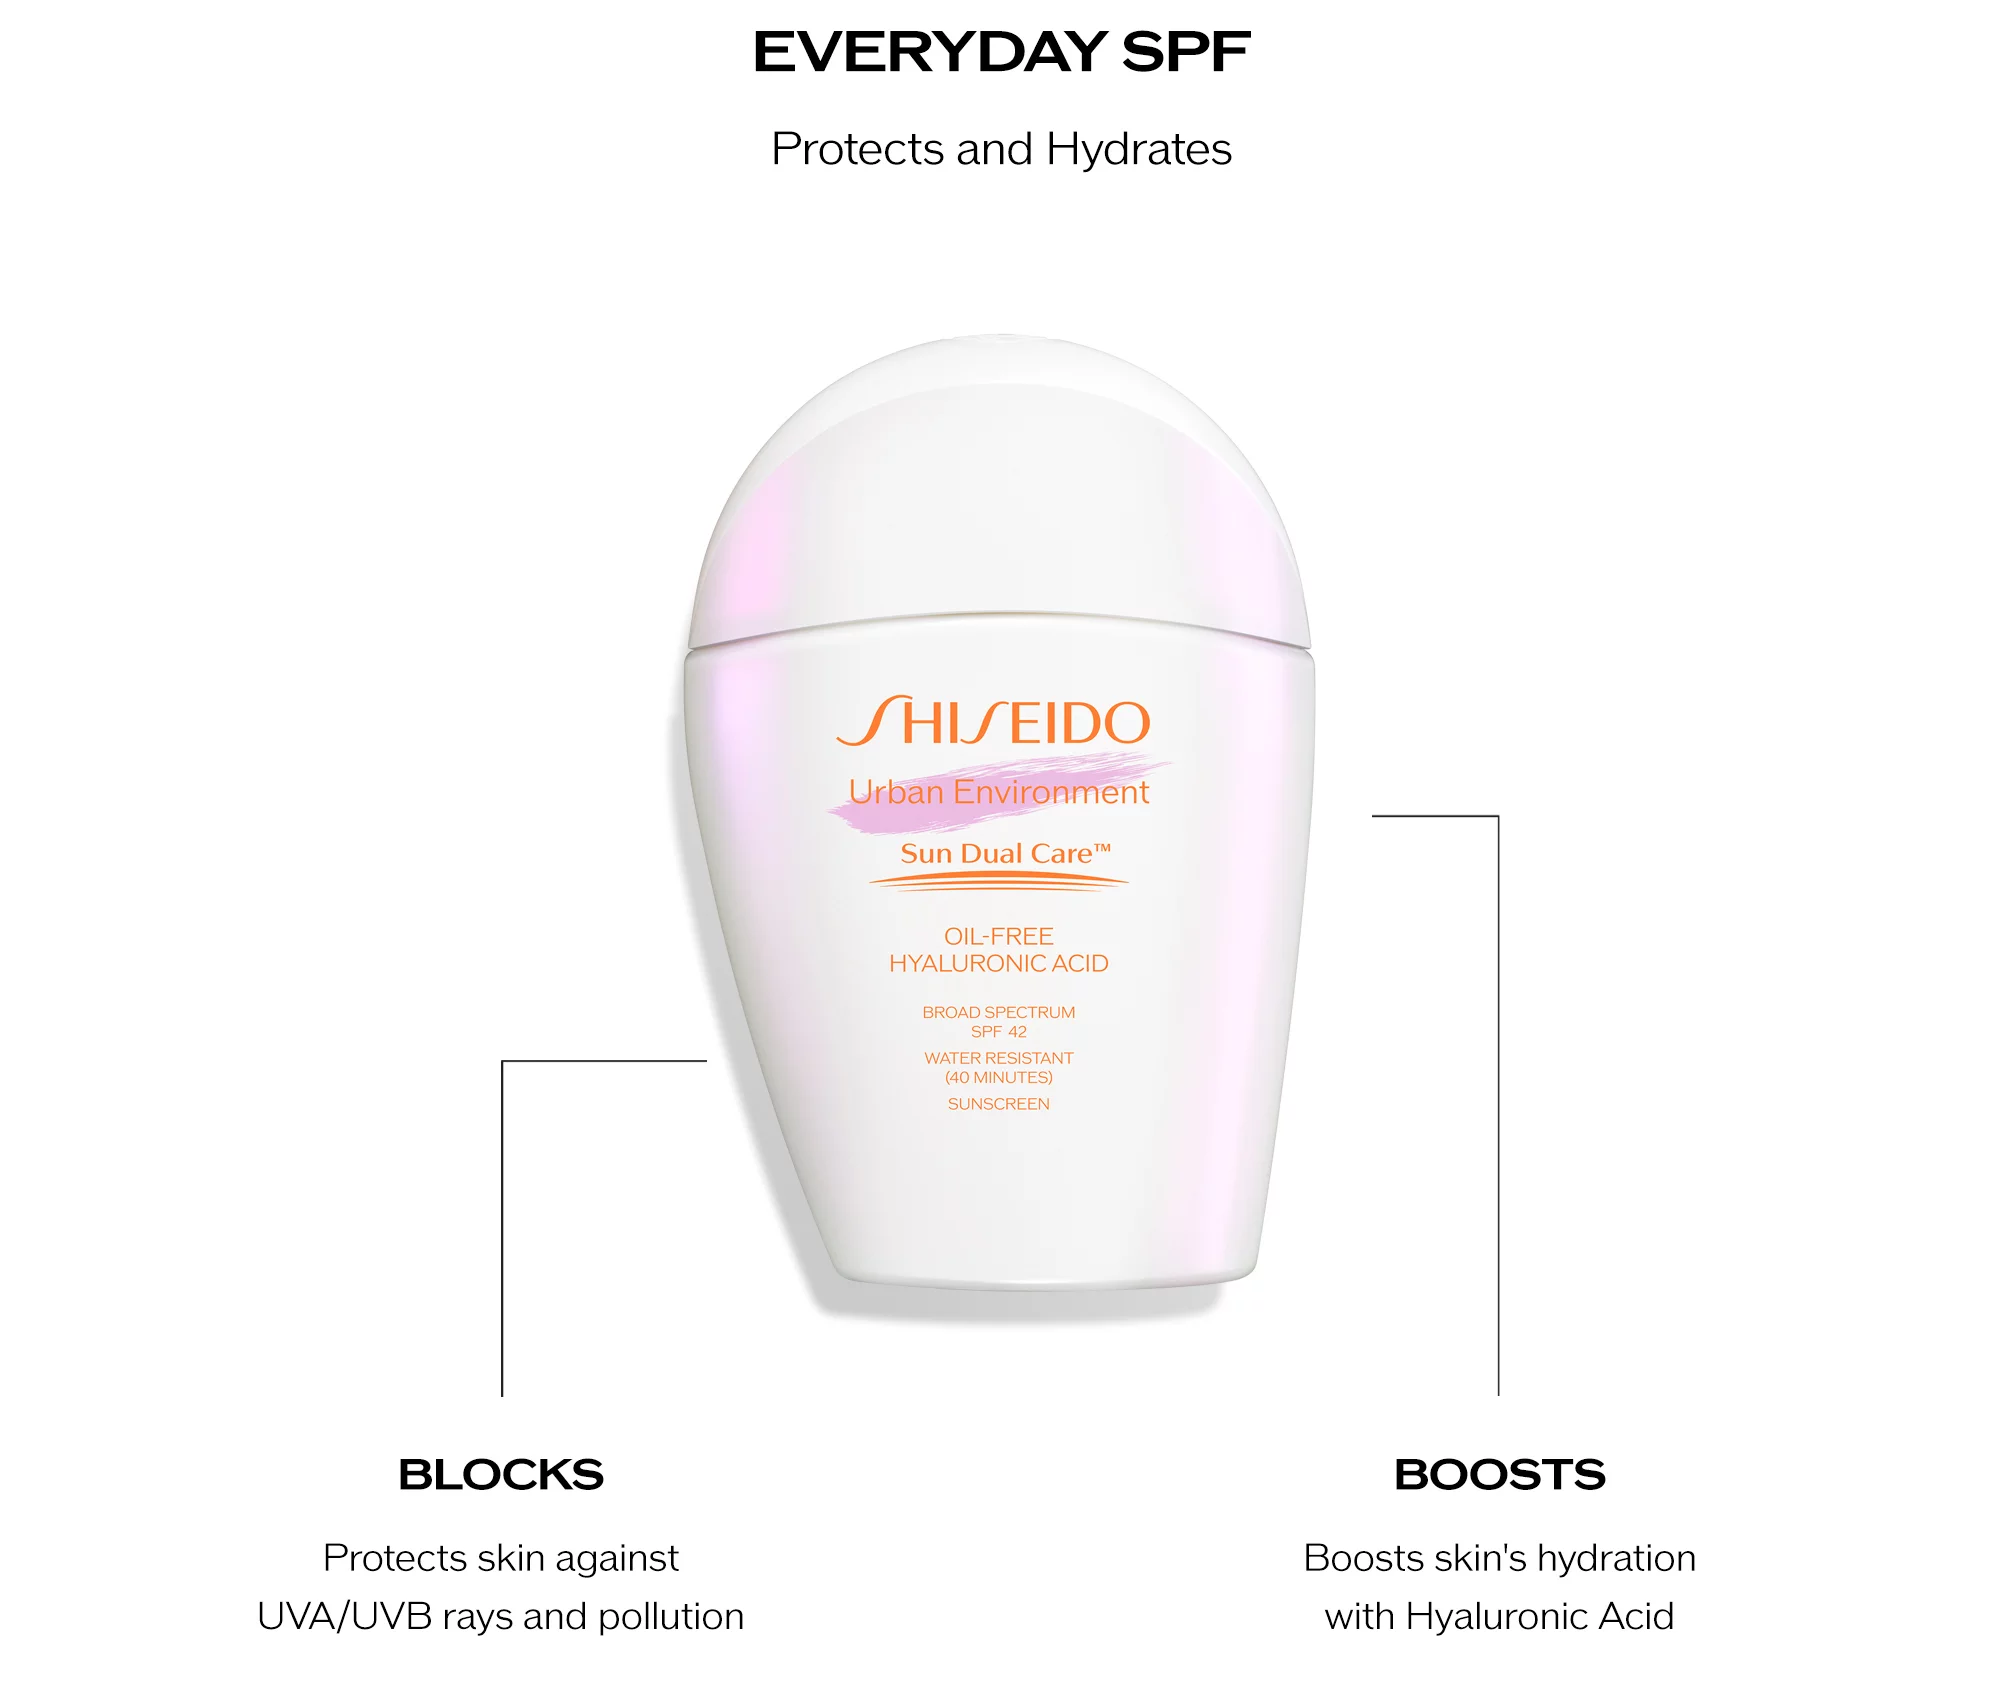 SHISEIDO Shiseido Urban Environment Oil-Free Sunscreen SPF 42 - 2 sizes